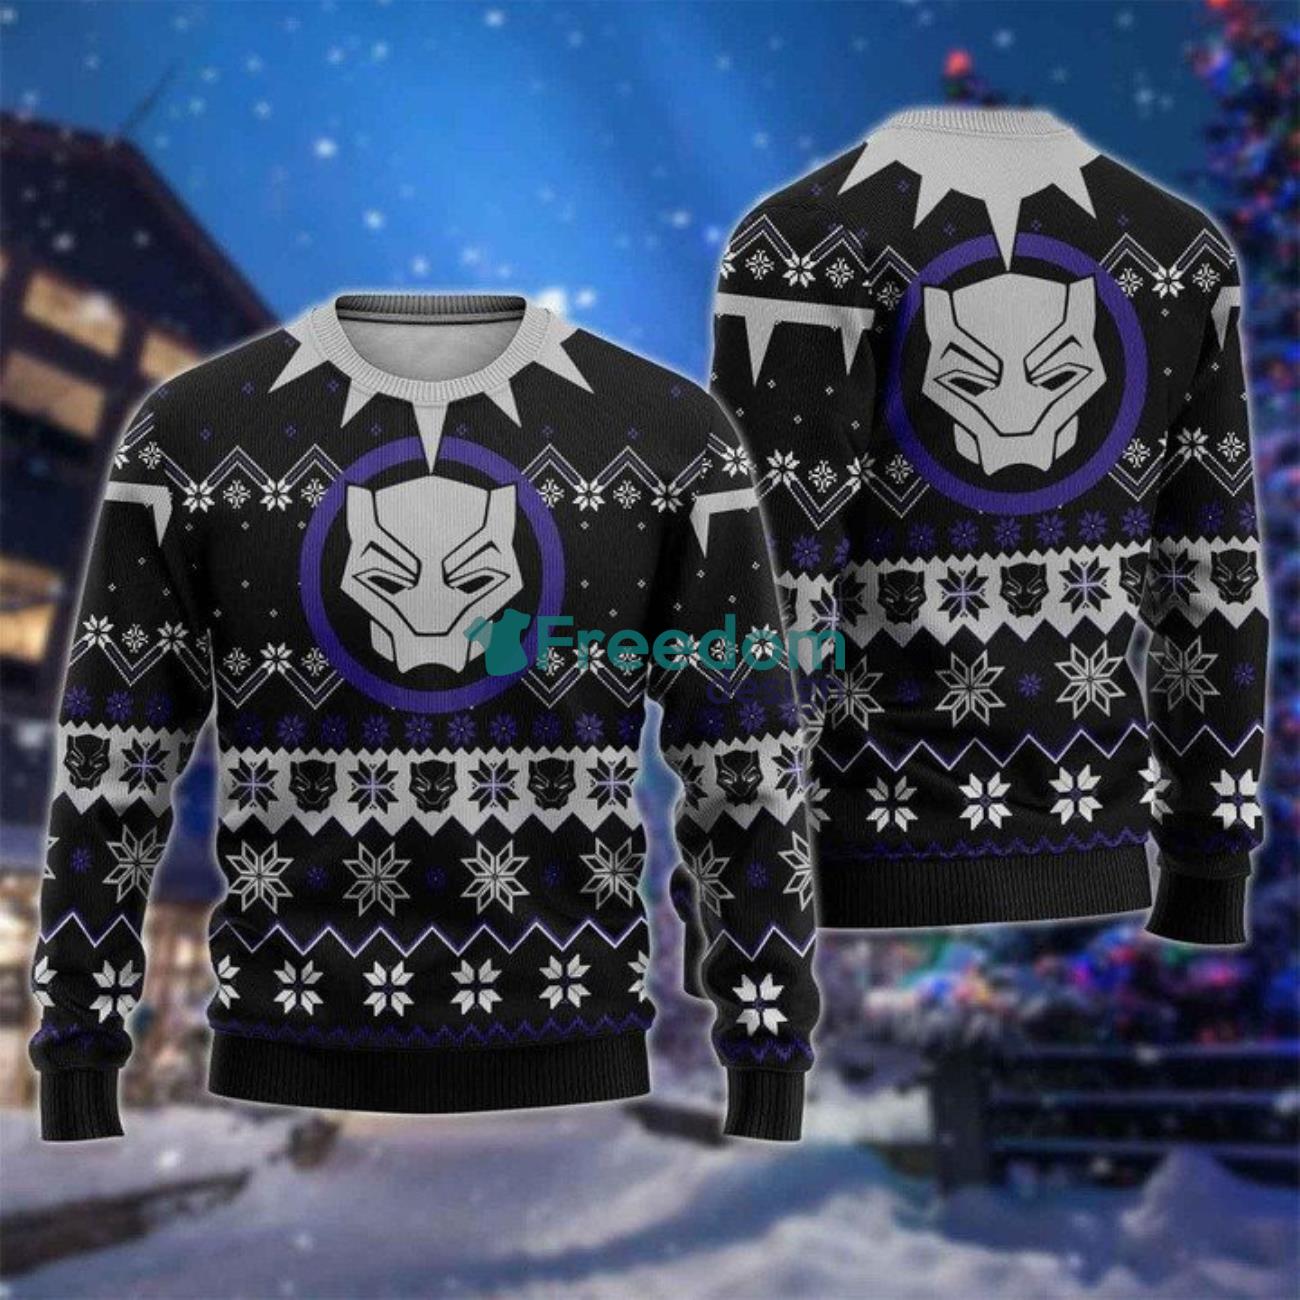 Black Panther Marvel Comics Christmas Sweater